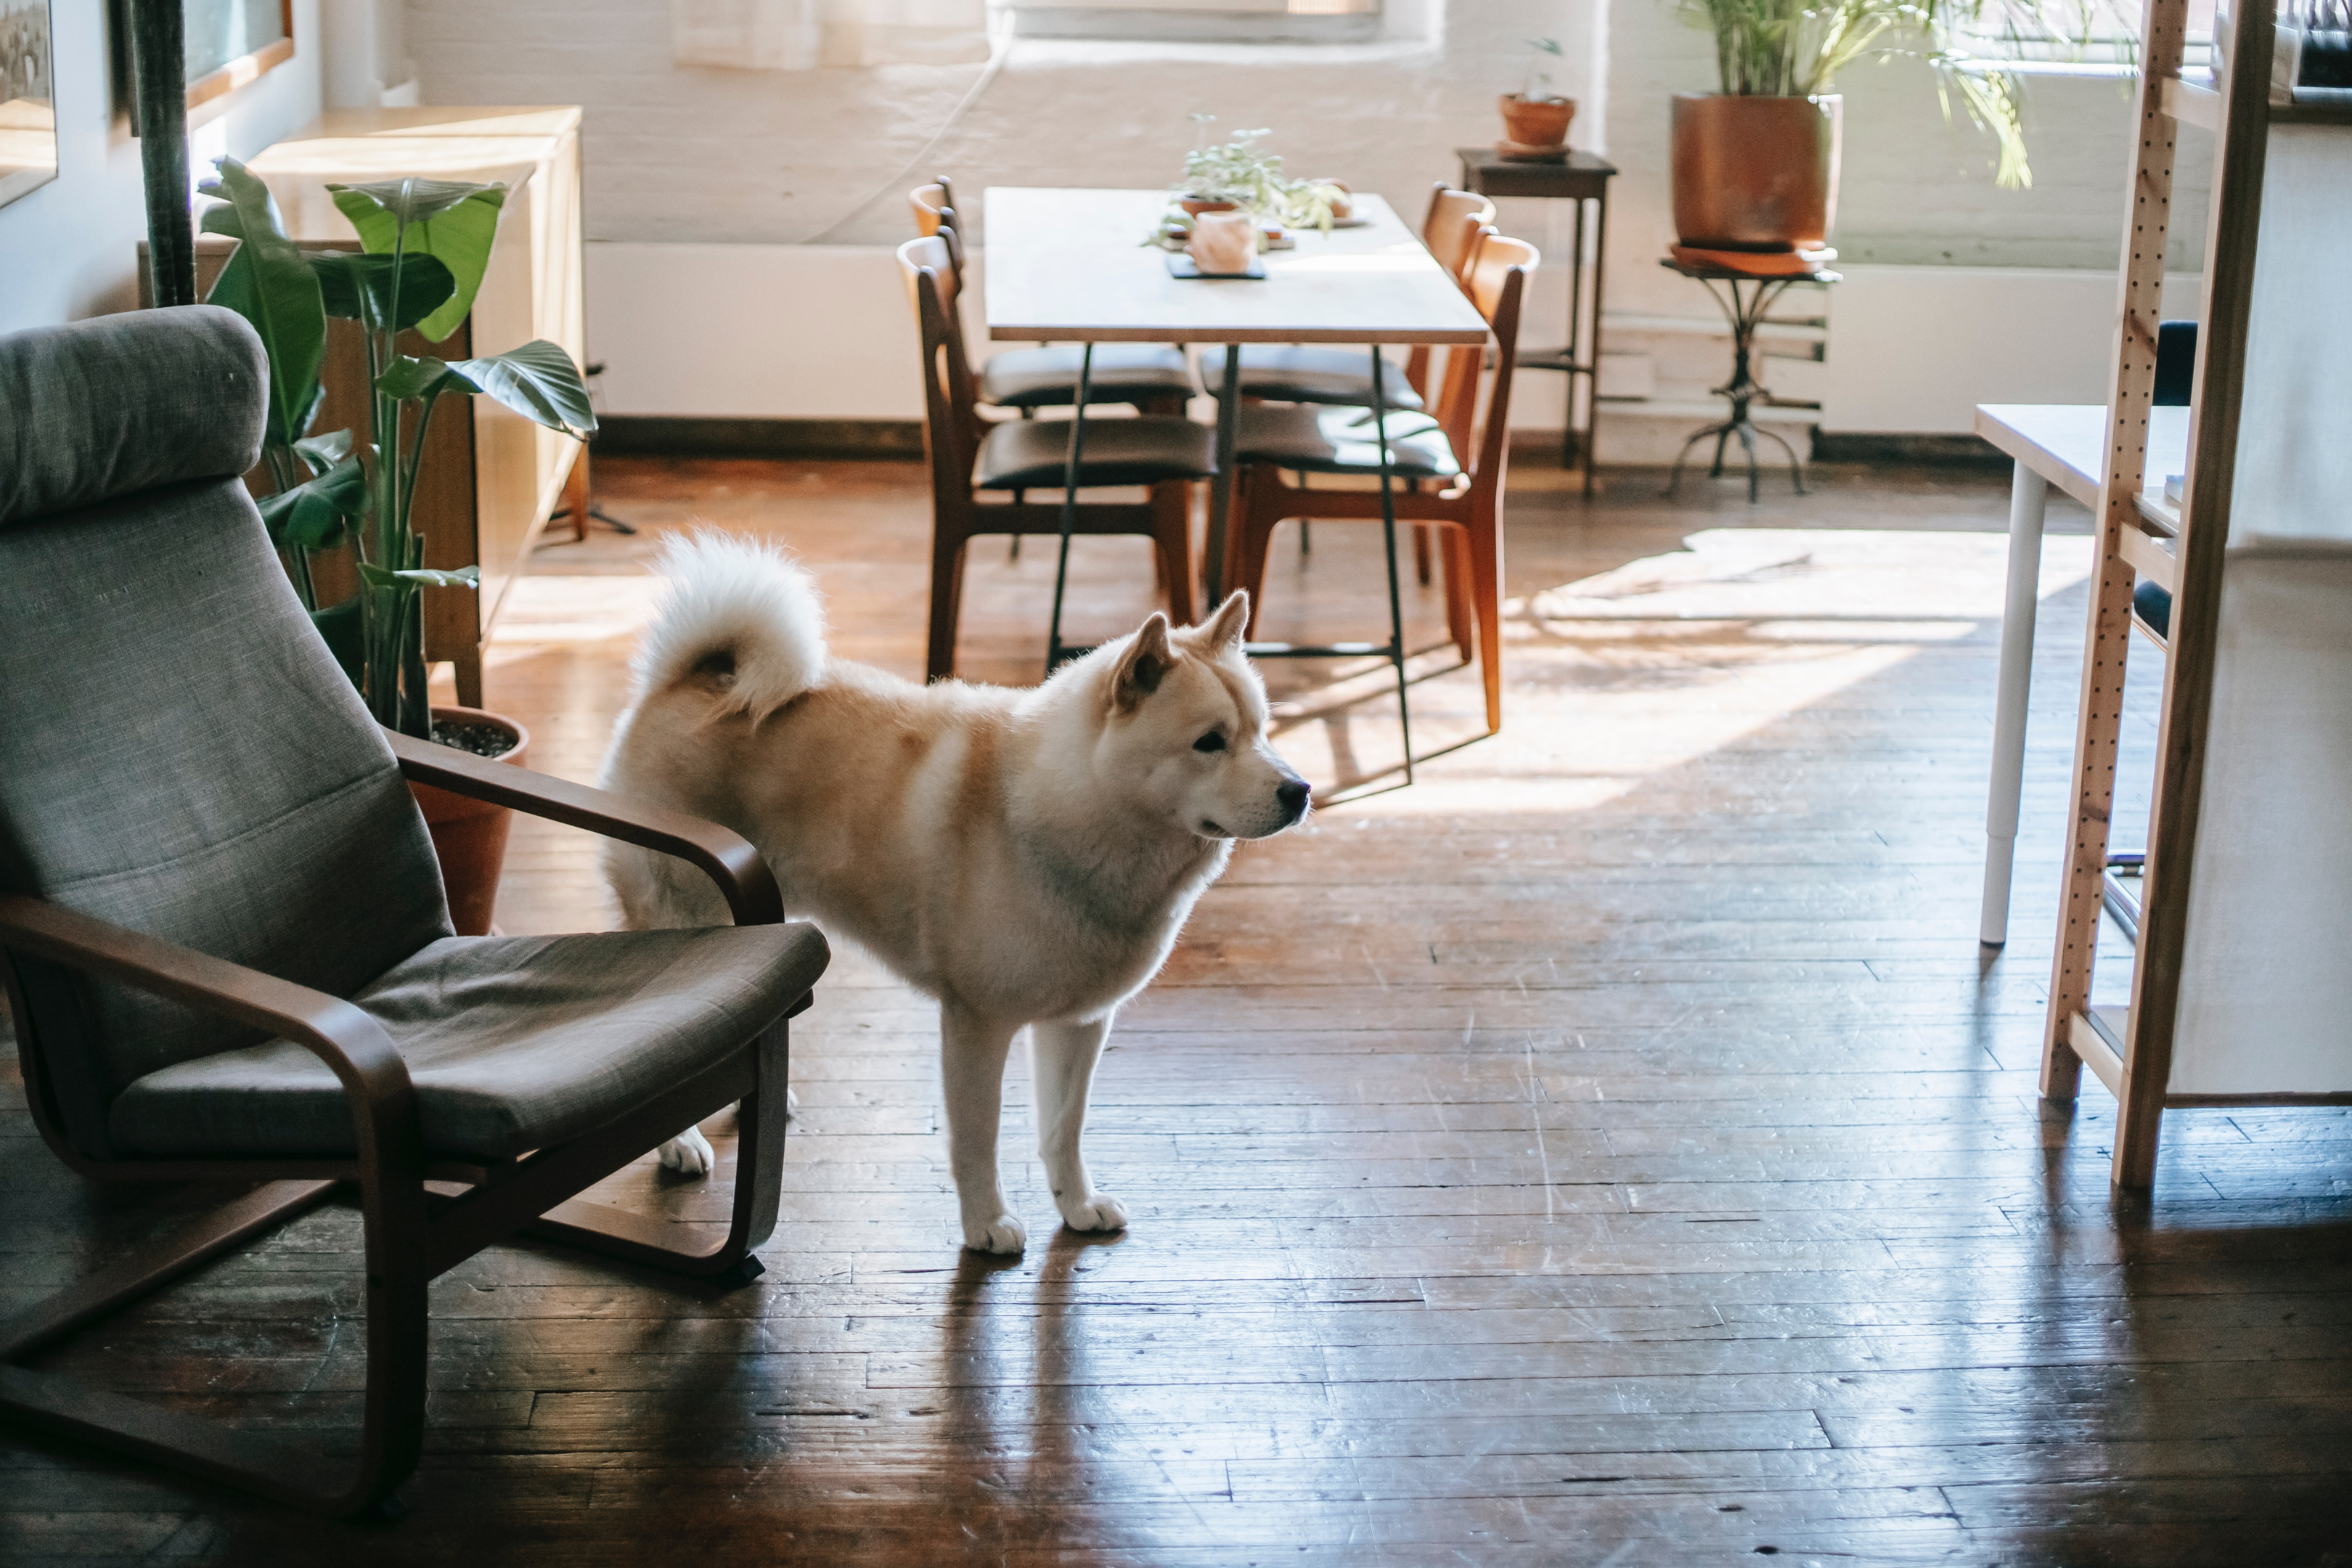 A curious dog standing near an armchair